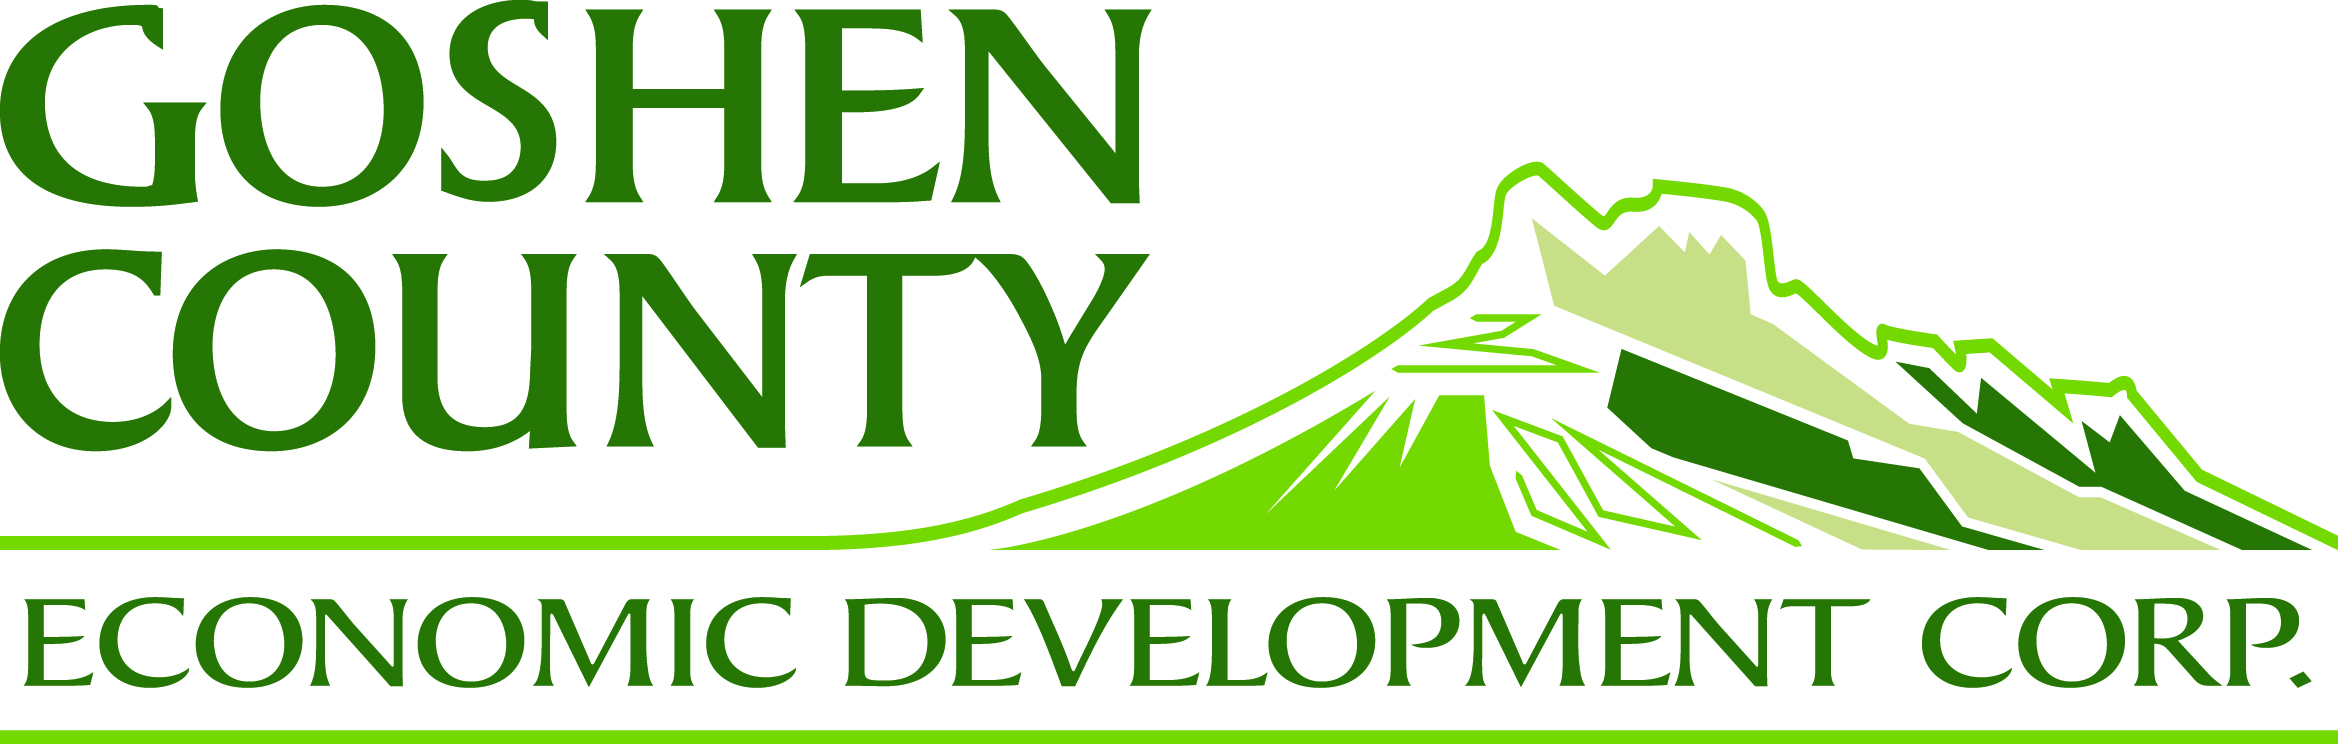 USA-OH-Goshen County Economic Development Corporation.jpg